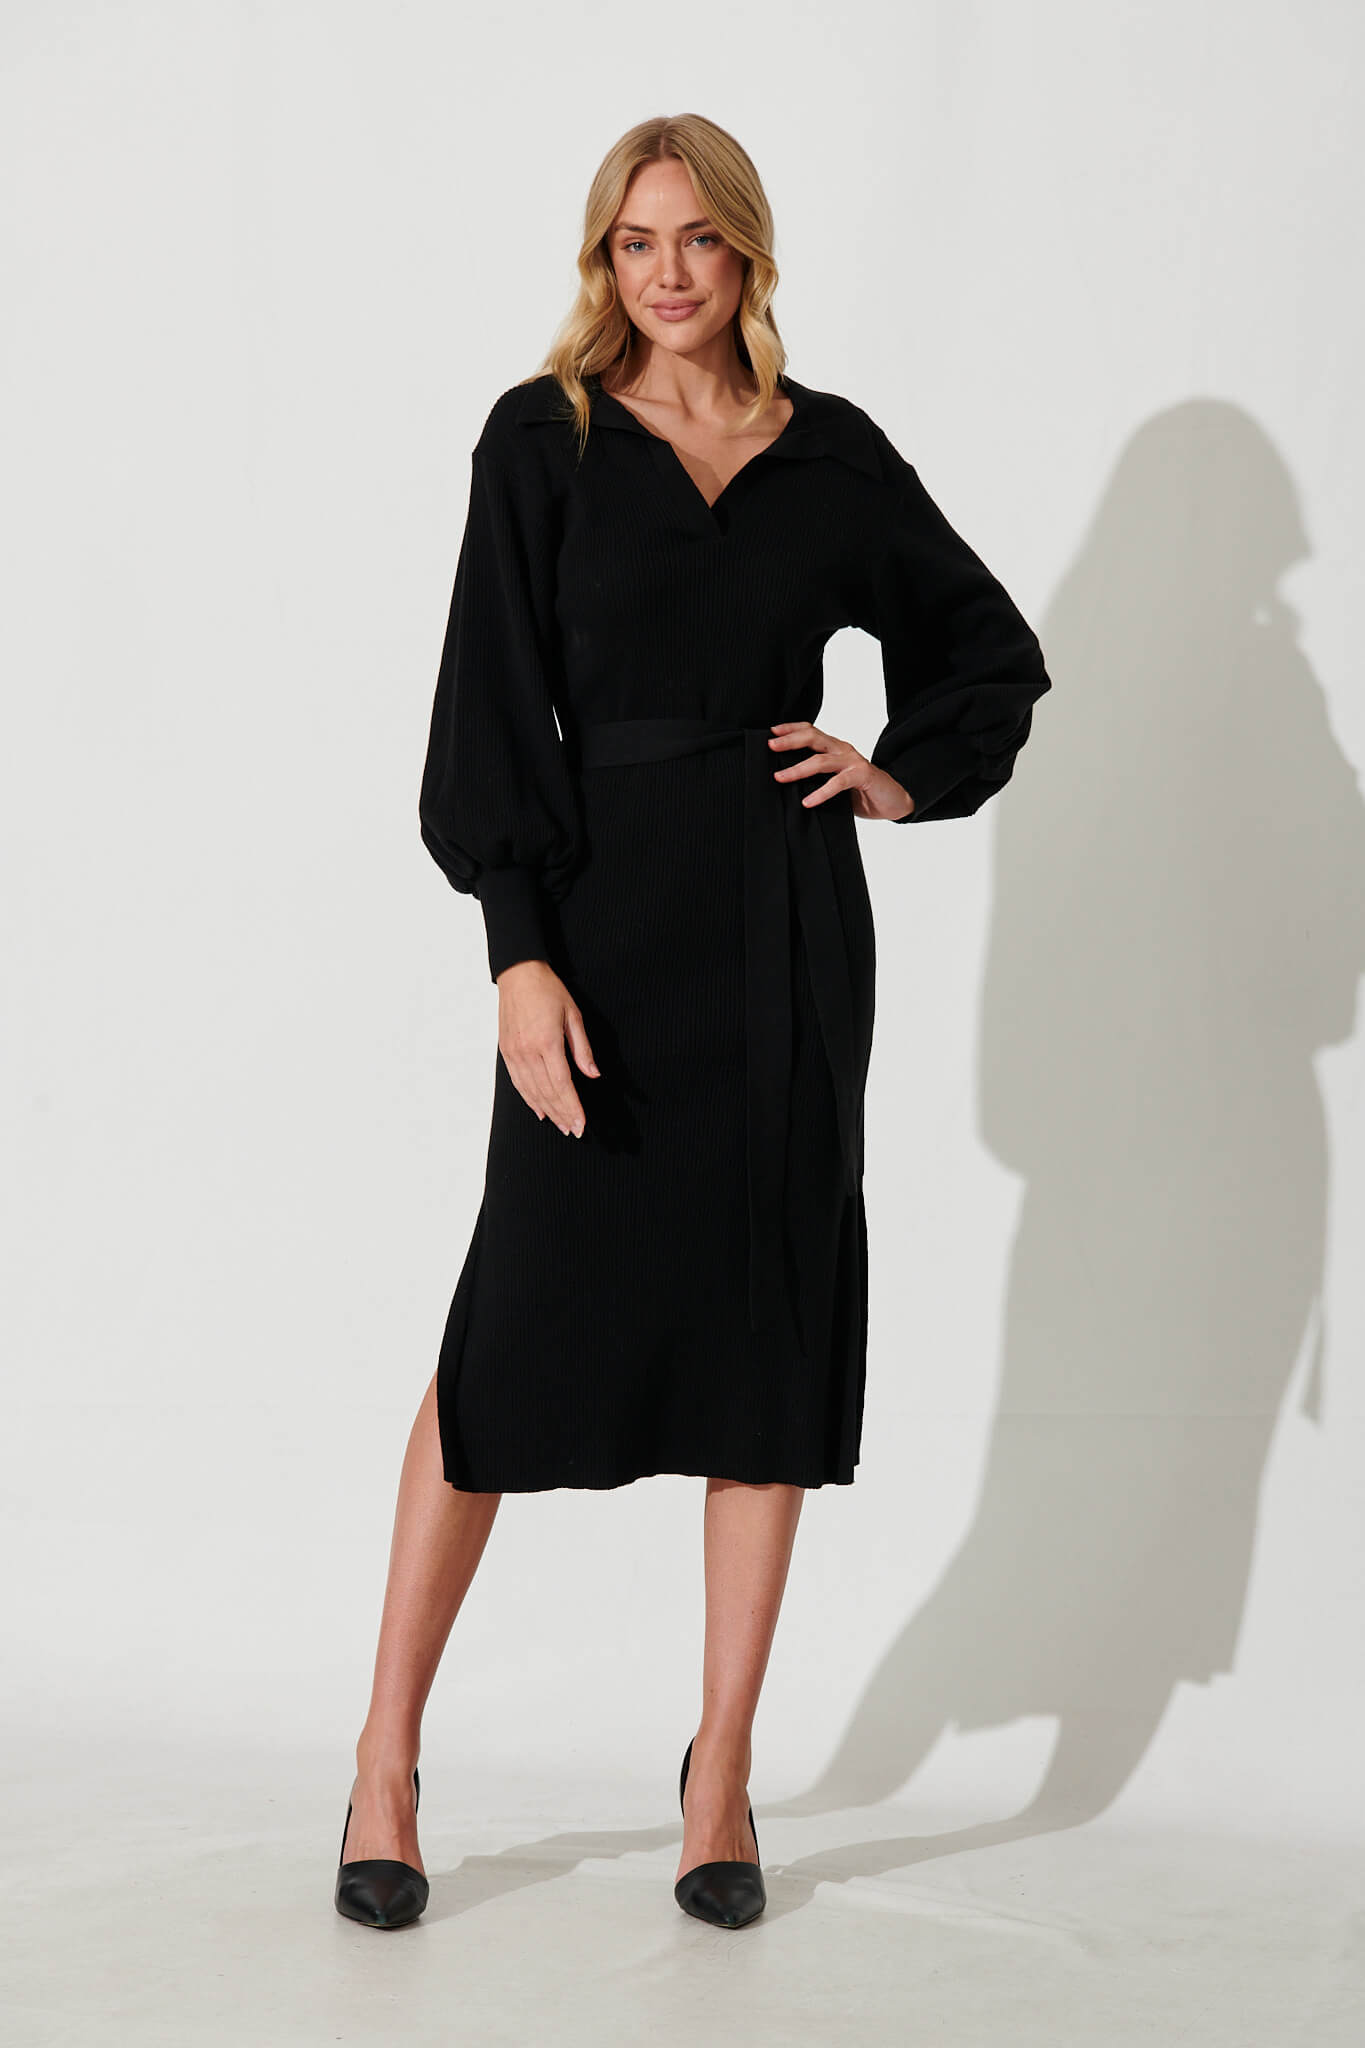 Temptress Knit Dress In Black Cotton - full length